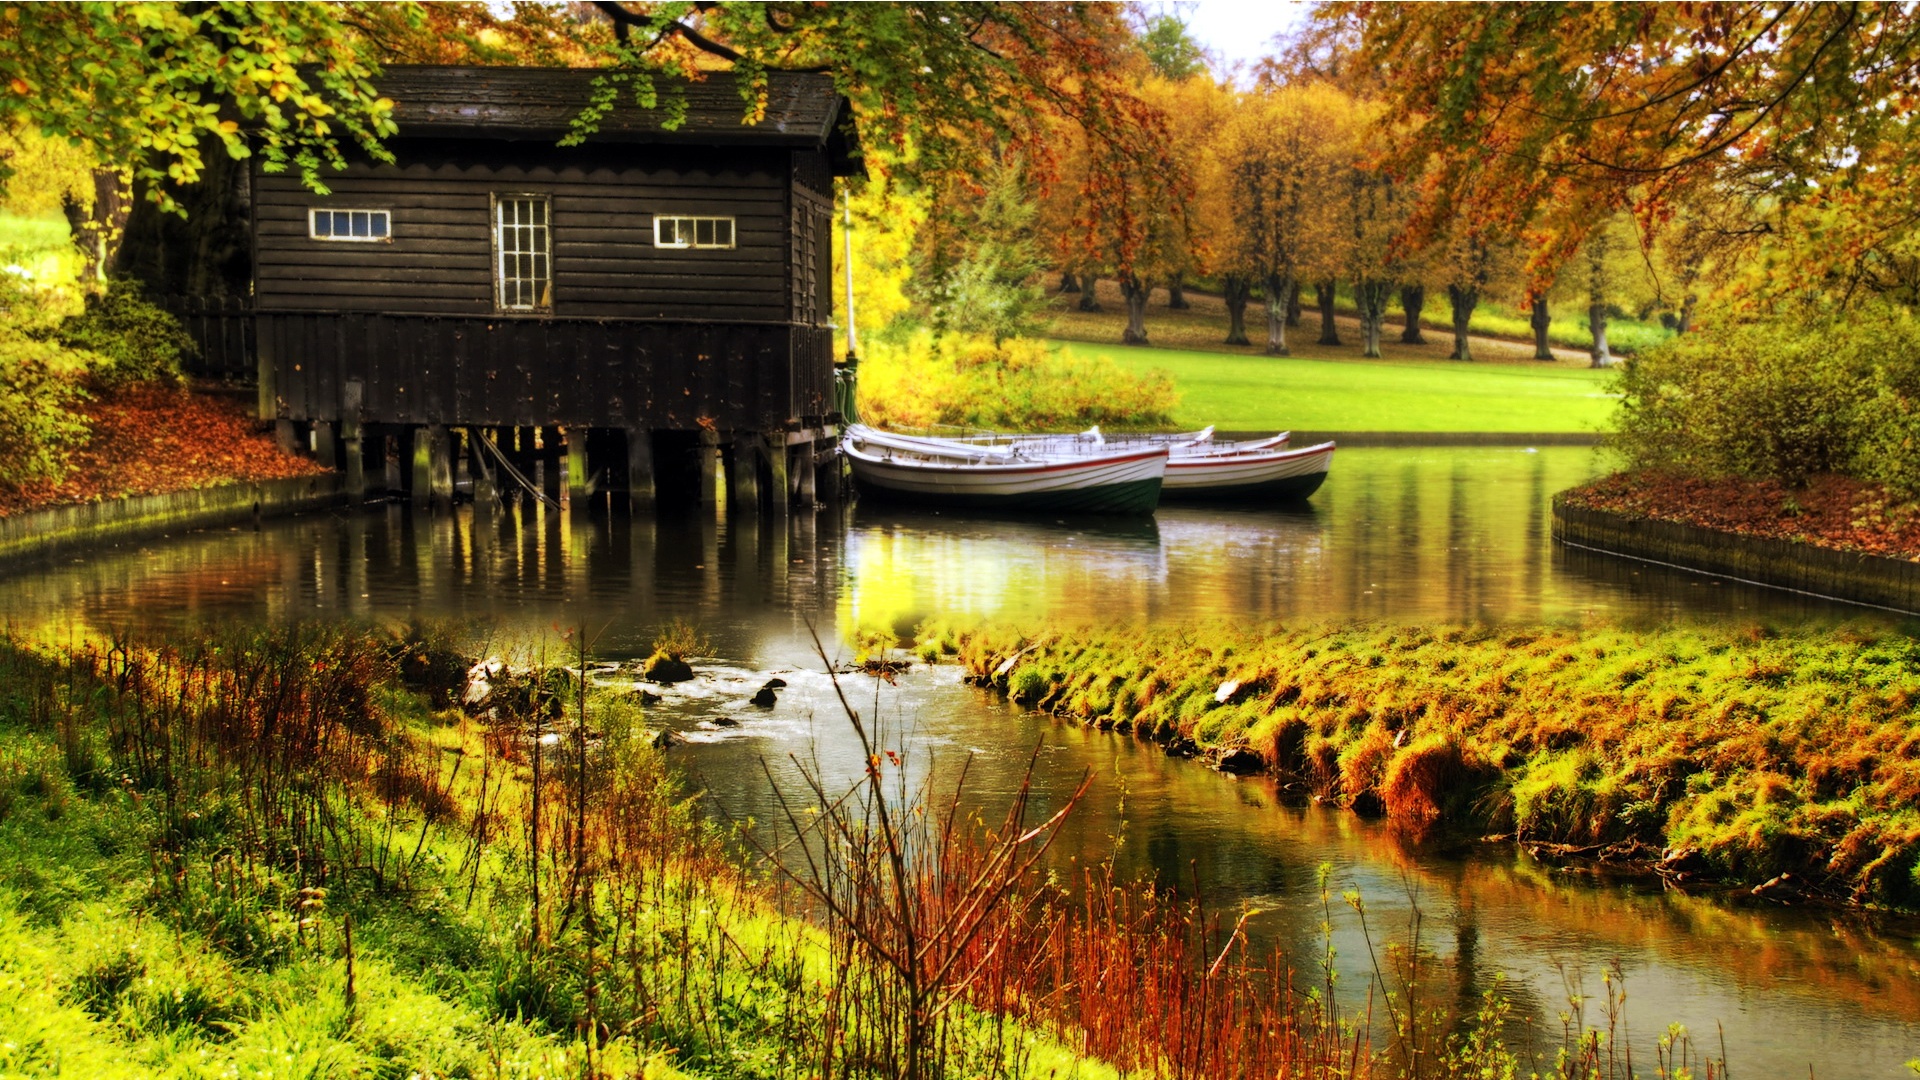 Dream Cottage - Beautiful Scenery